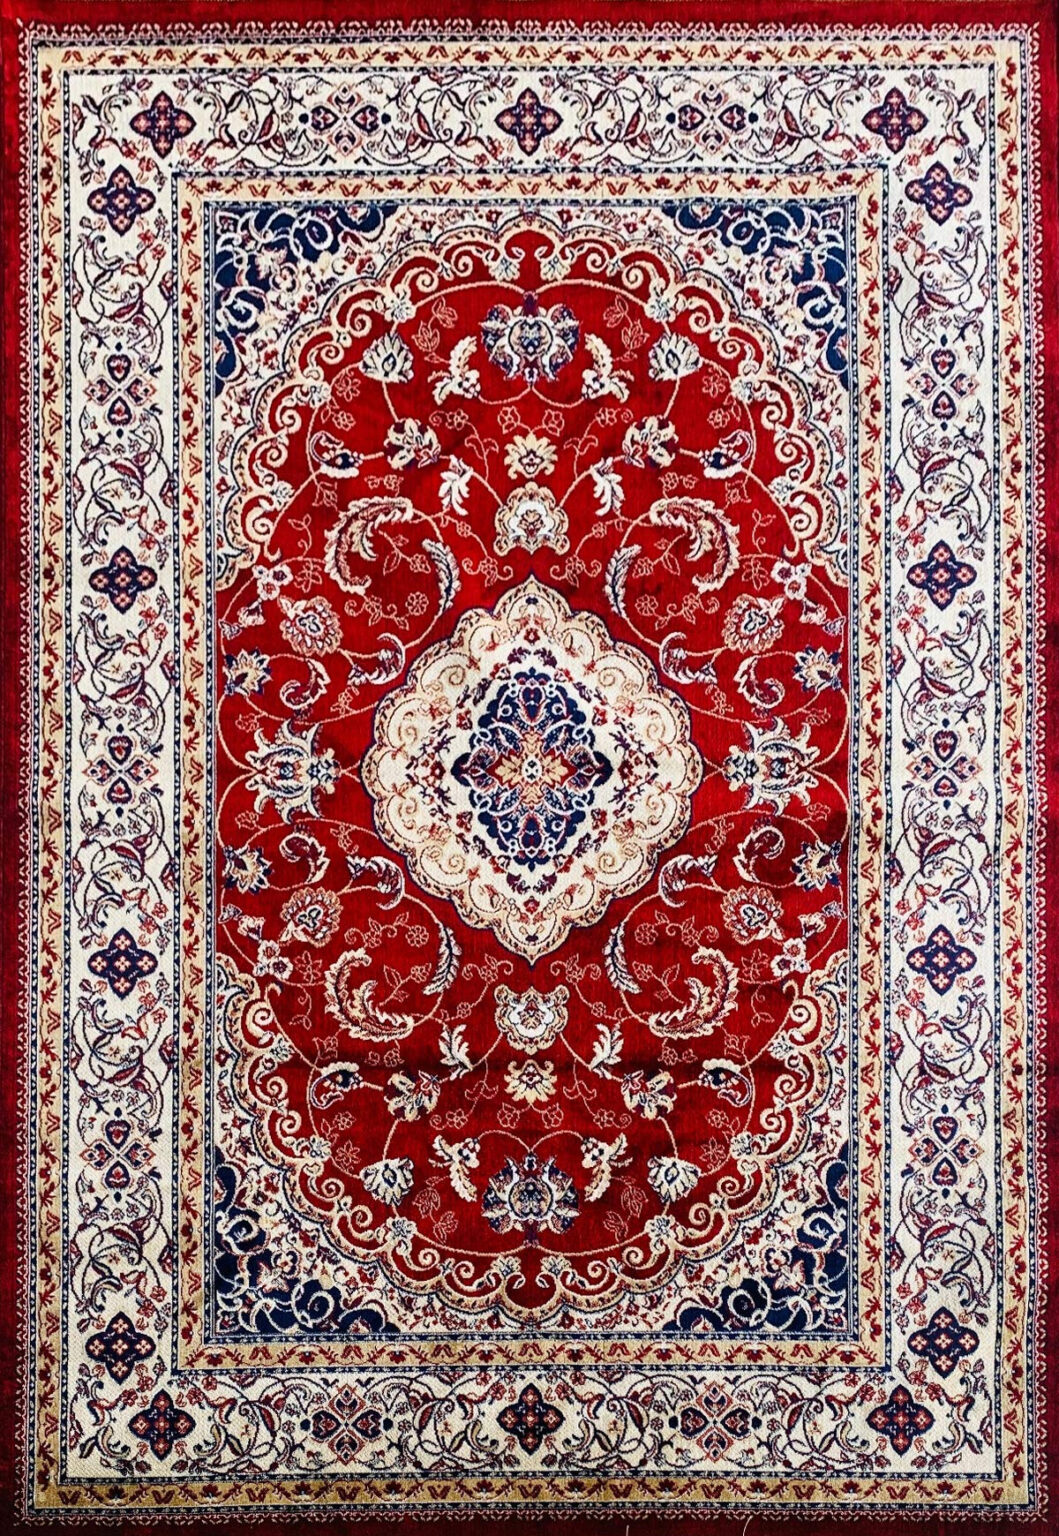 Oriental Carpets